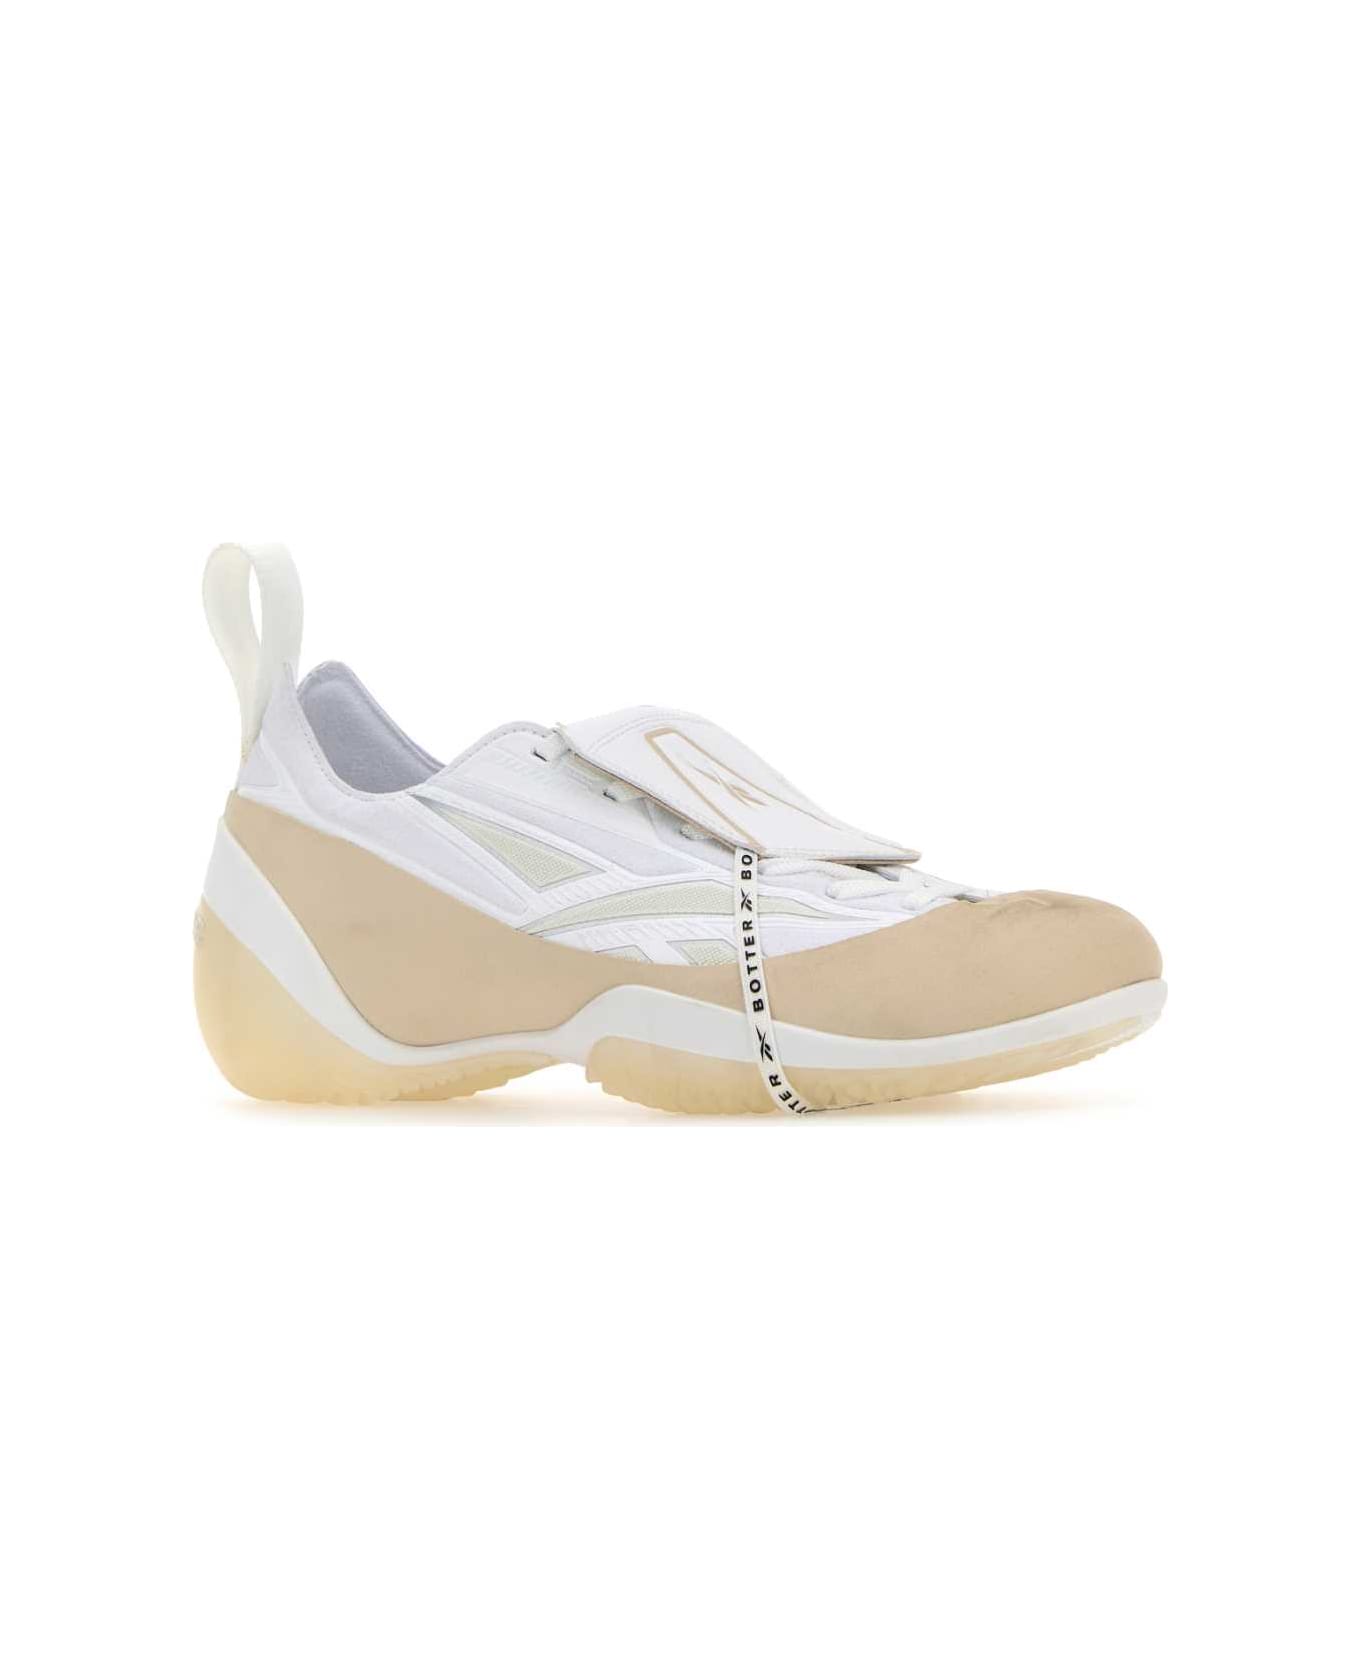 Reebok Two-tone Rubber And Fabric Reebok X Botter Energia Bo Kã¨ts Sneakers - WHITEBEIGE